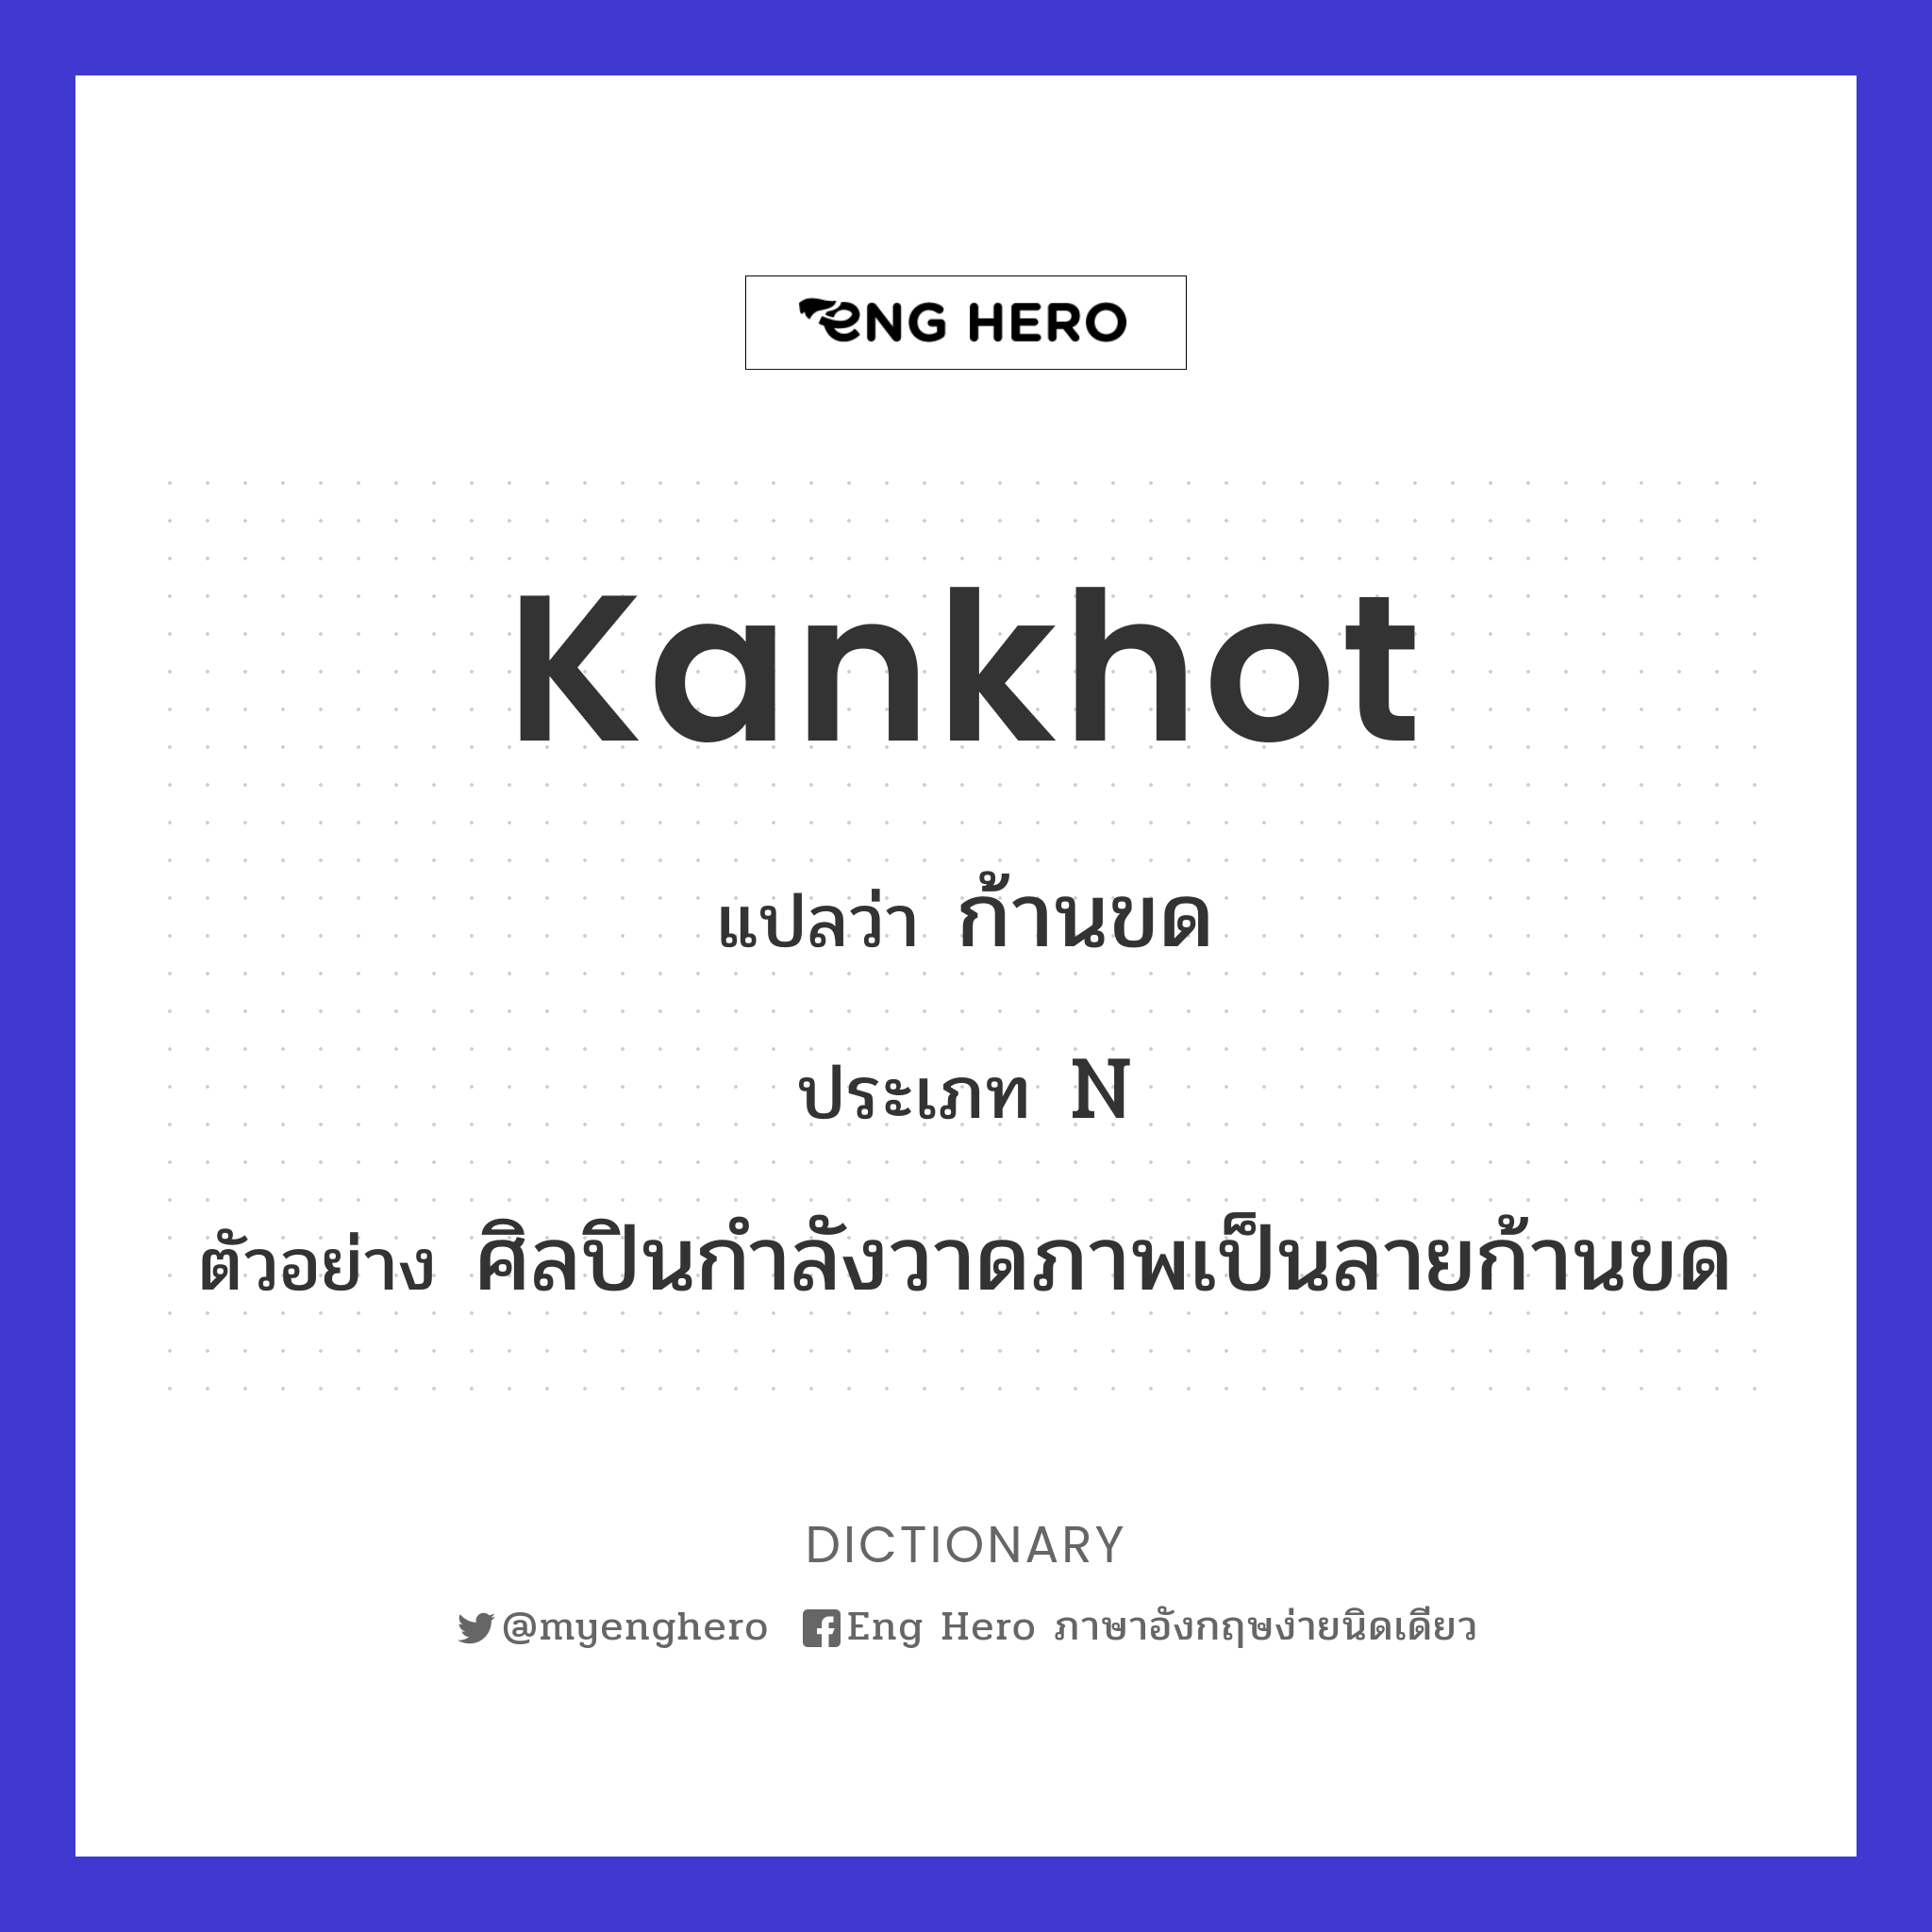 Kankhot